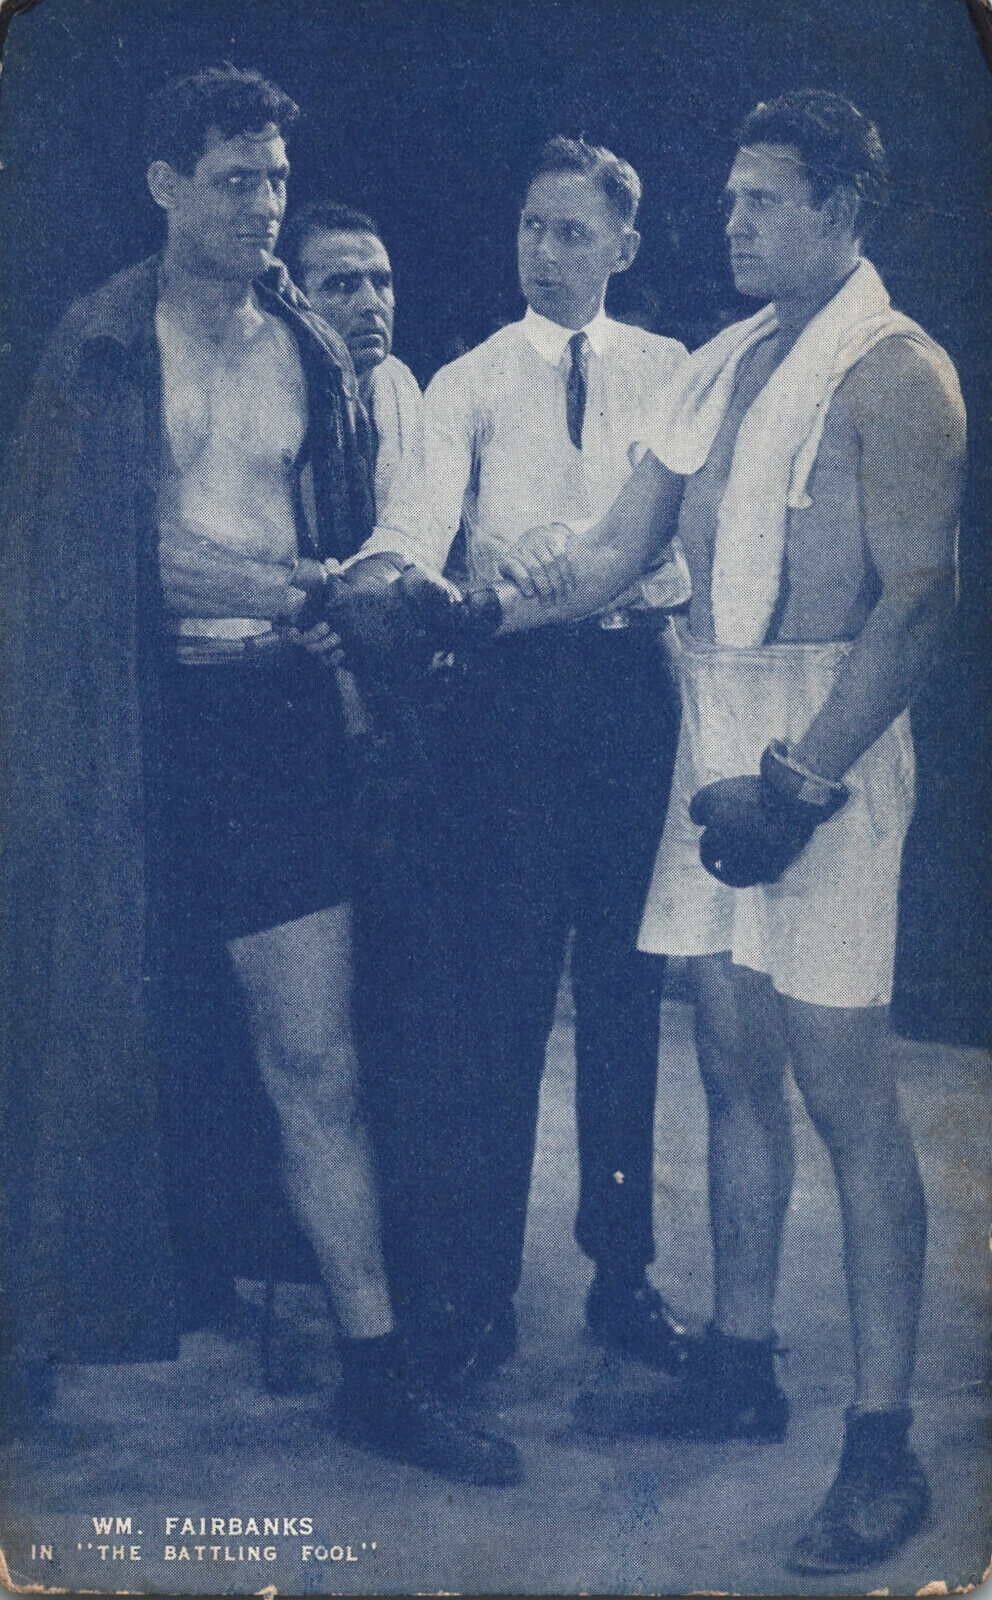 Boxing WM Fairbanks The Battling Fool 1924 Movie Vintage Exhibit Card Postcard